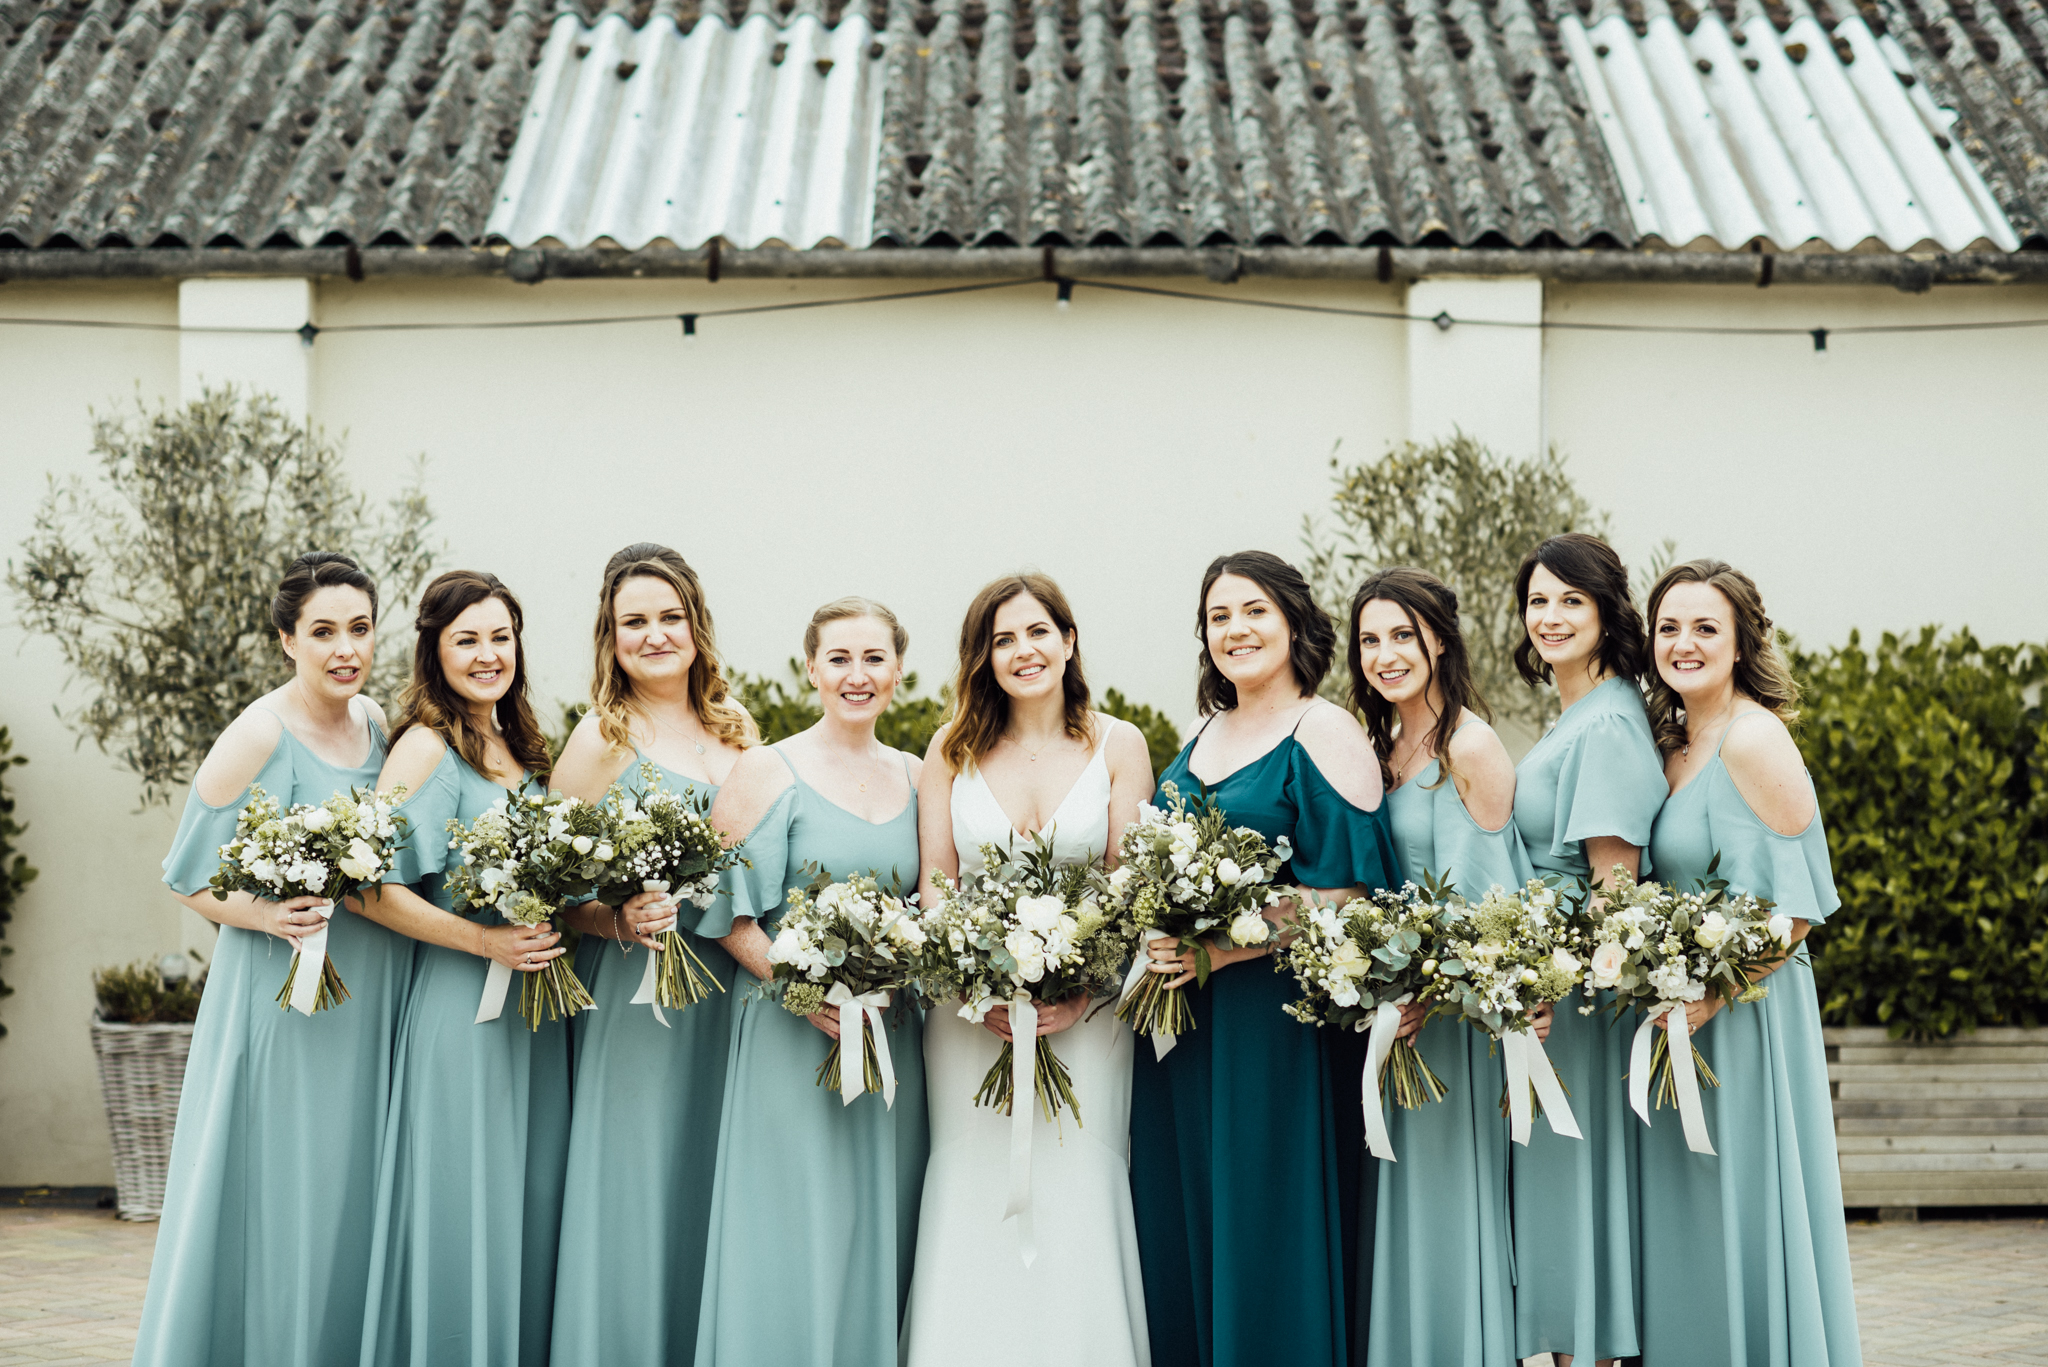 Michelle Wood Photographer, green bridesmaids dresses, sassi holford bride, Stratton court barn wedding photographer